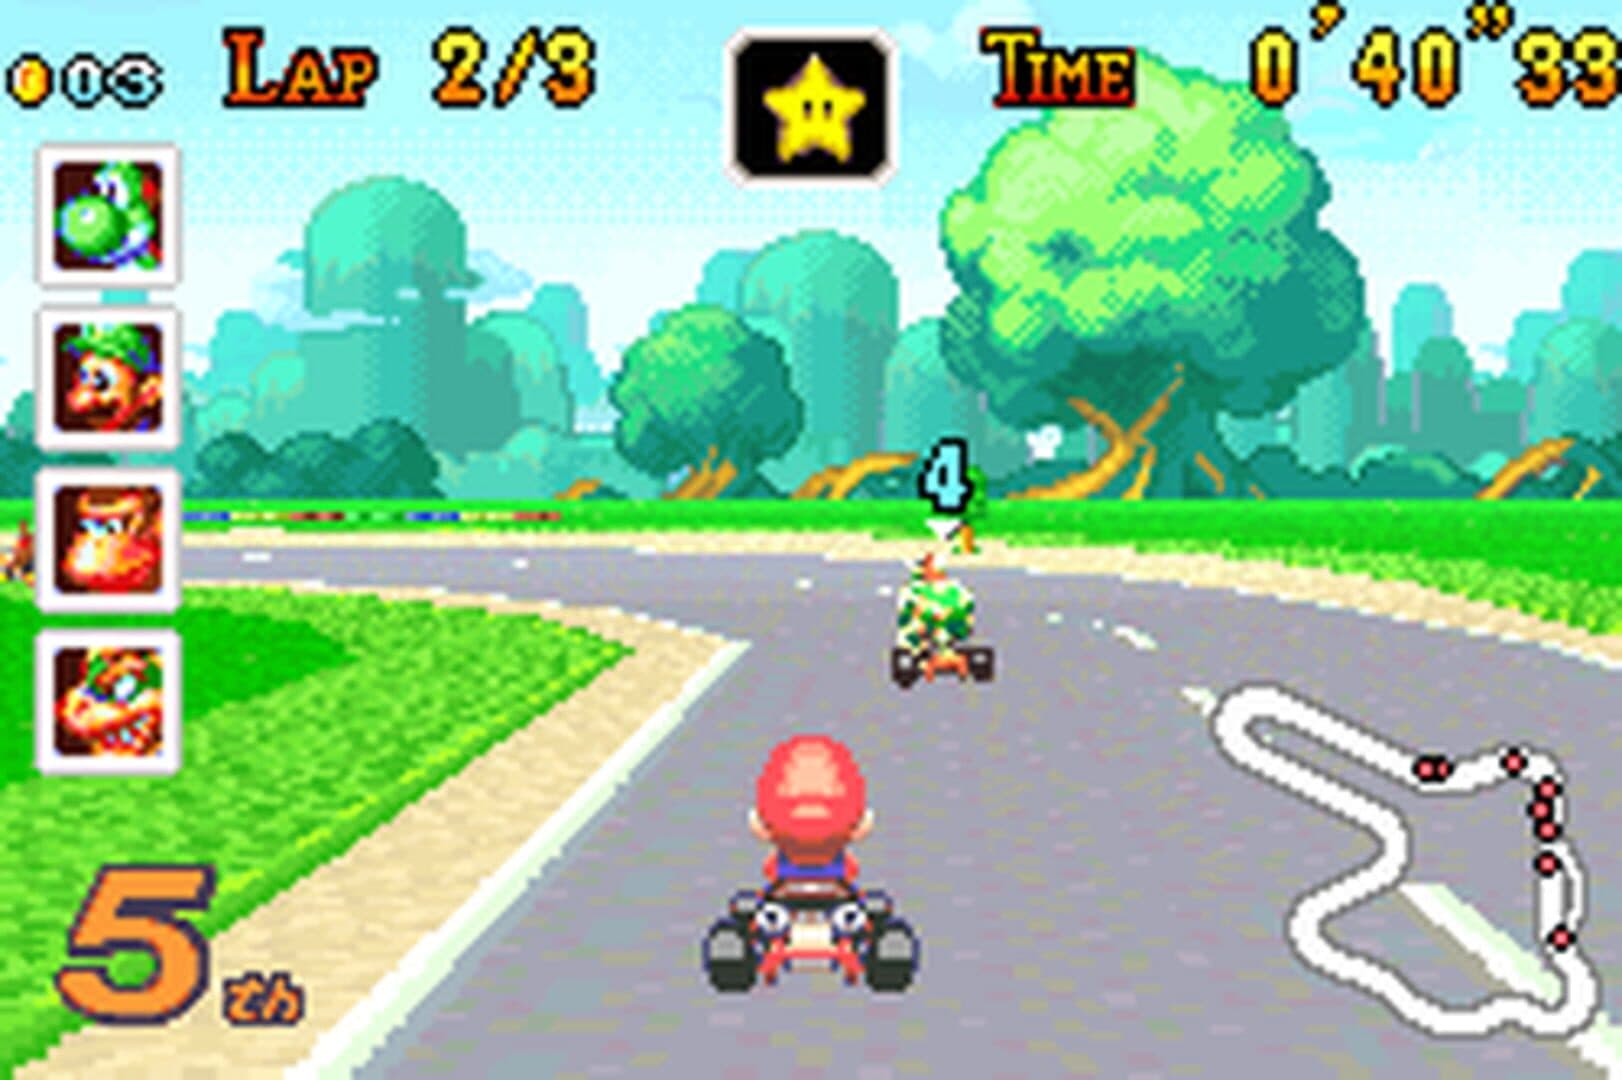 Mario Kart: Super Circuit Image